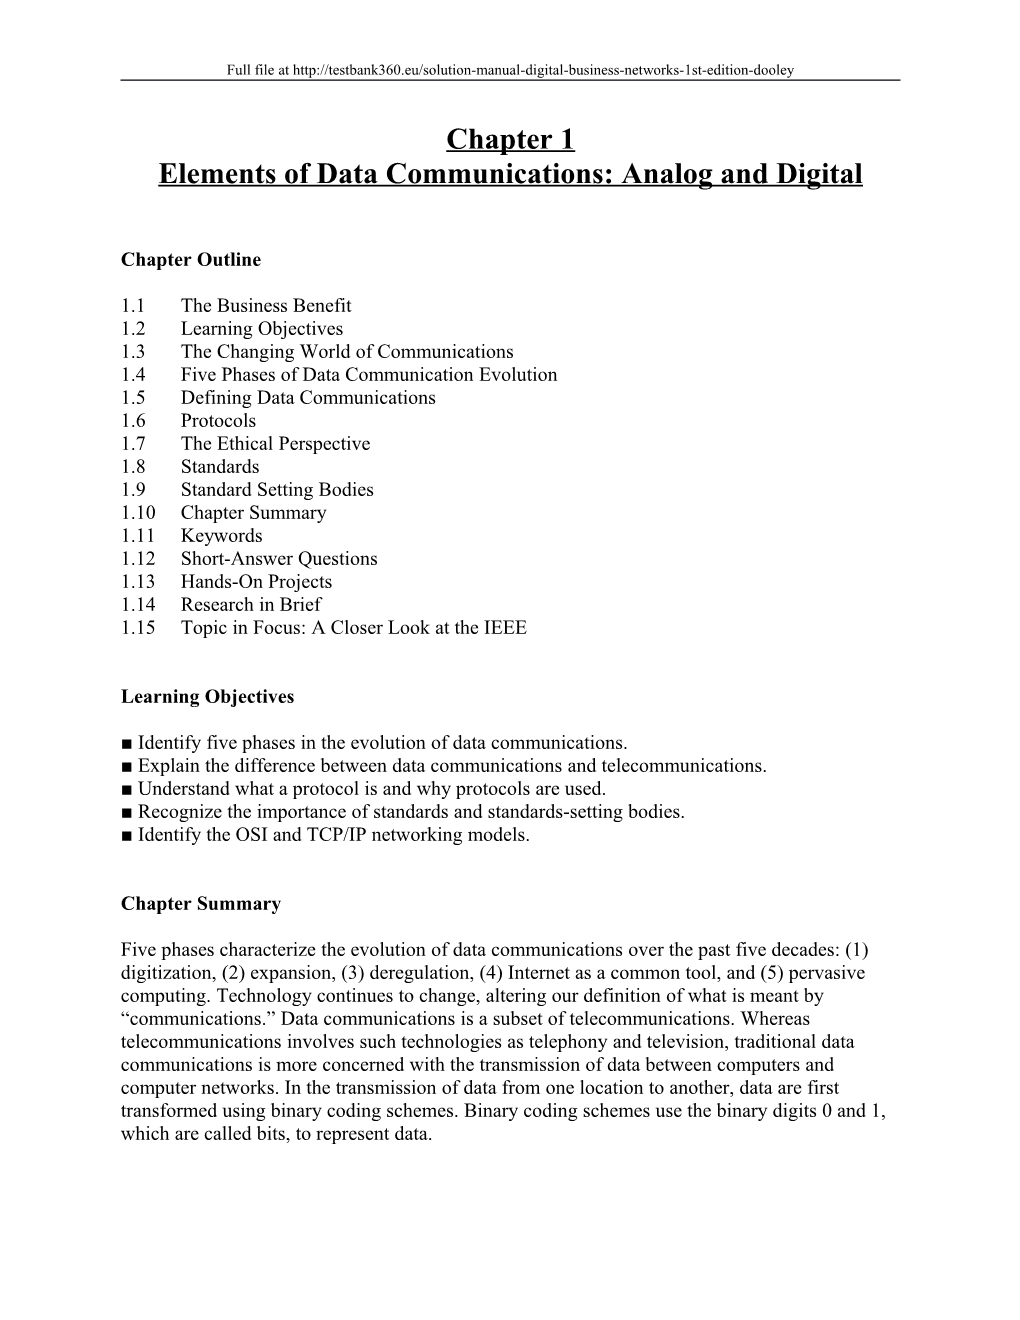 Elements of Data Communications: Analog and Digital